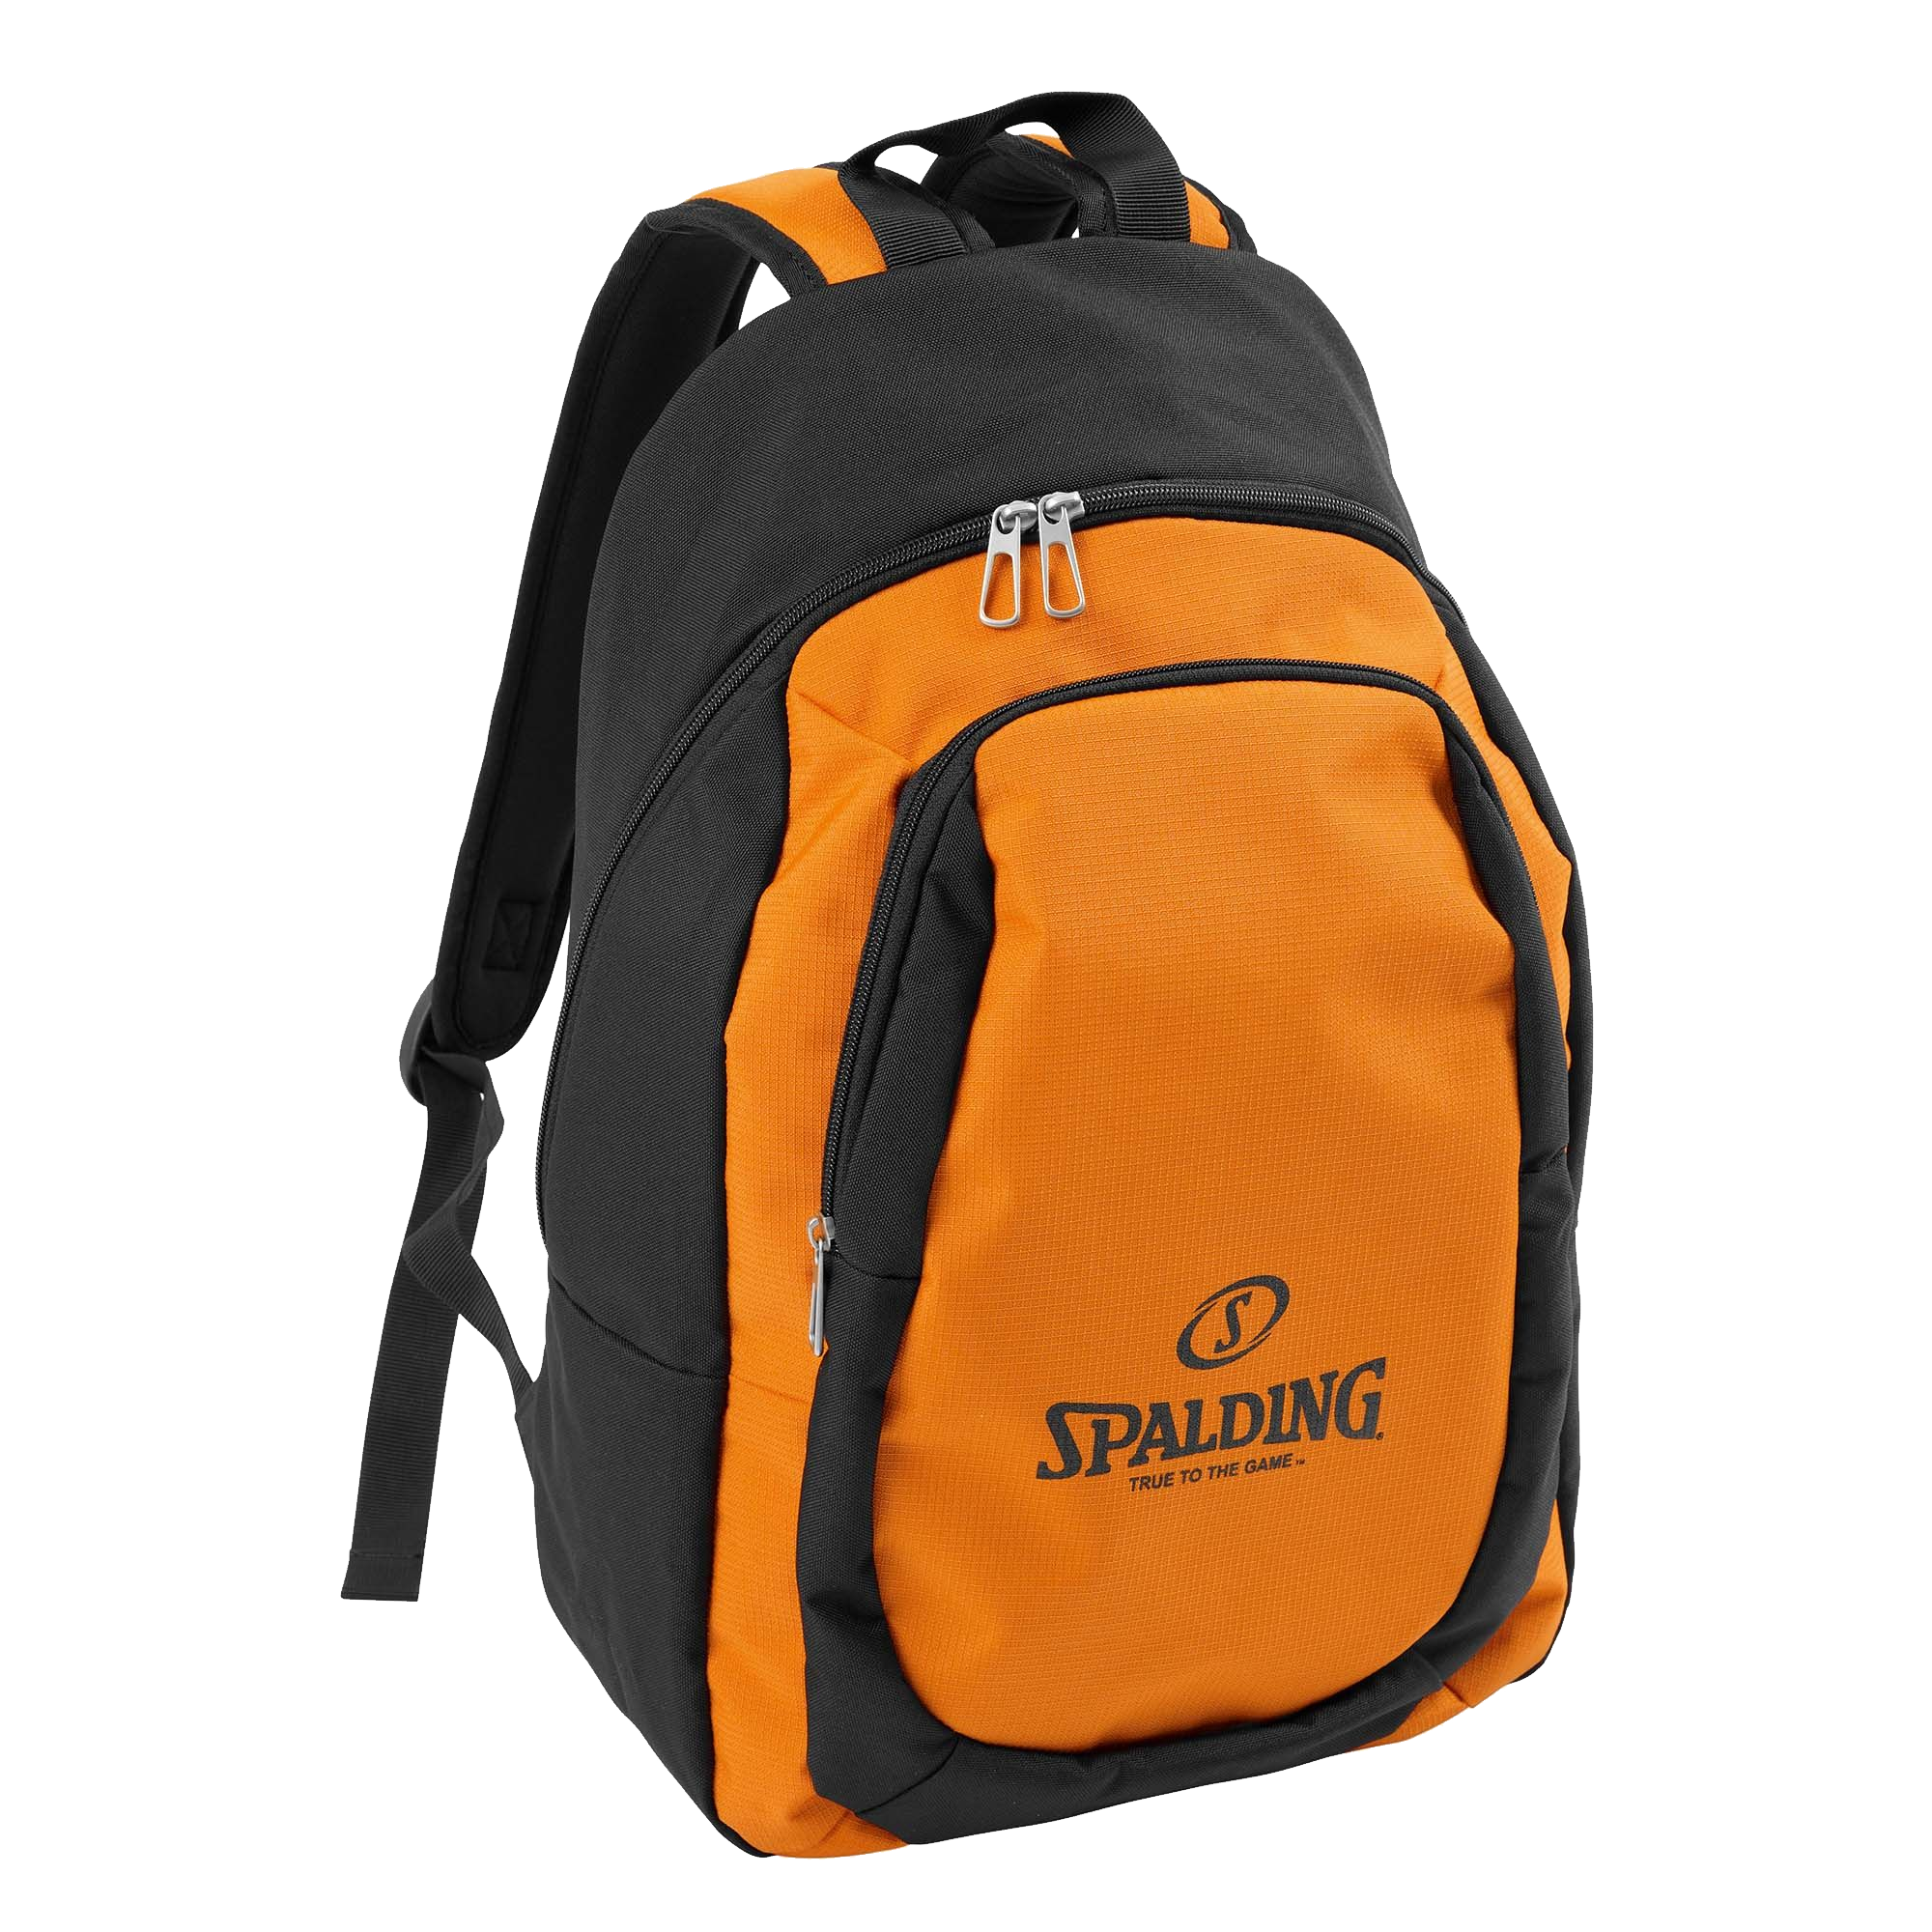 Splanding  True To The Game Orange Backpack